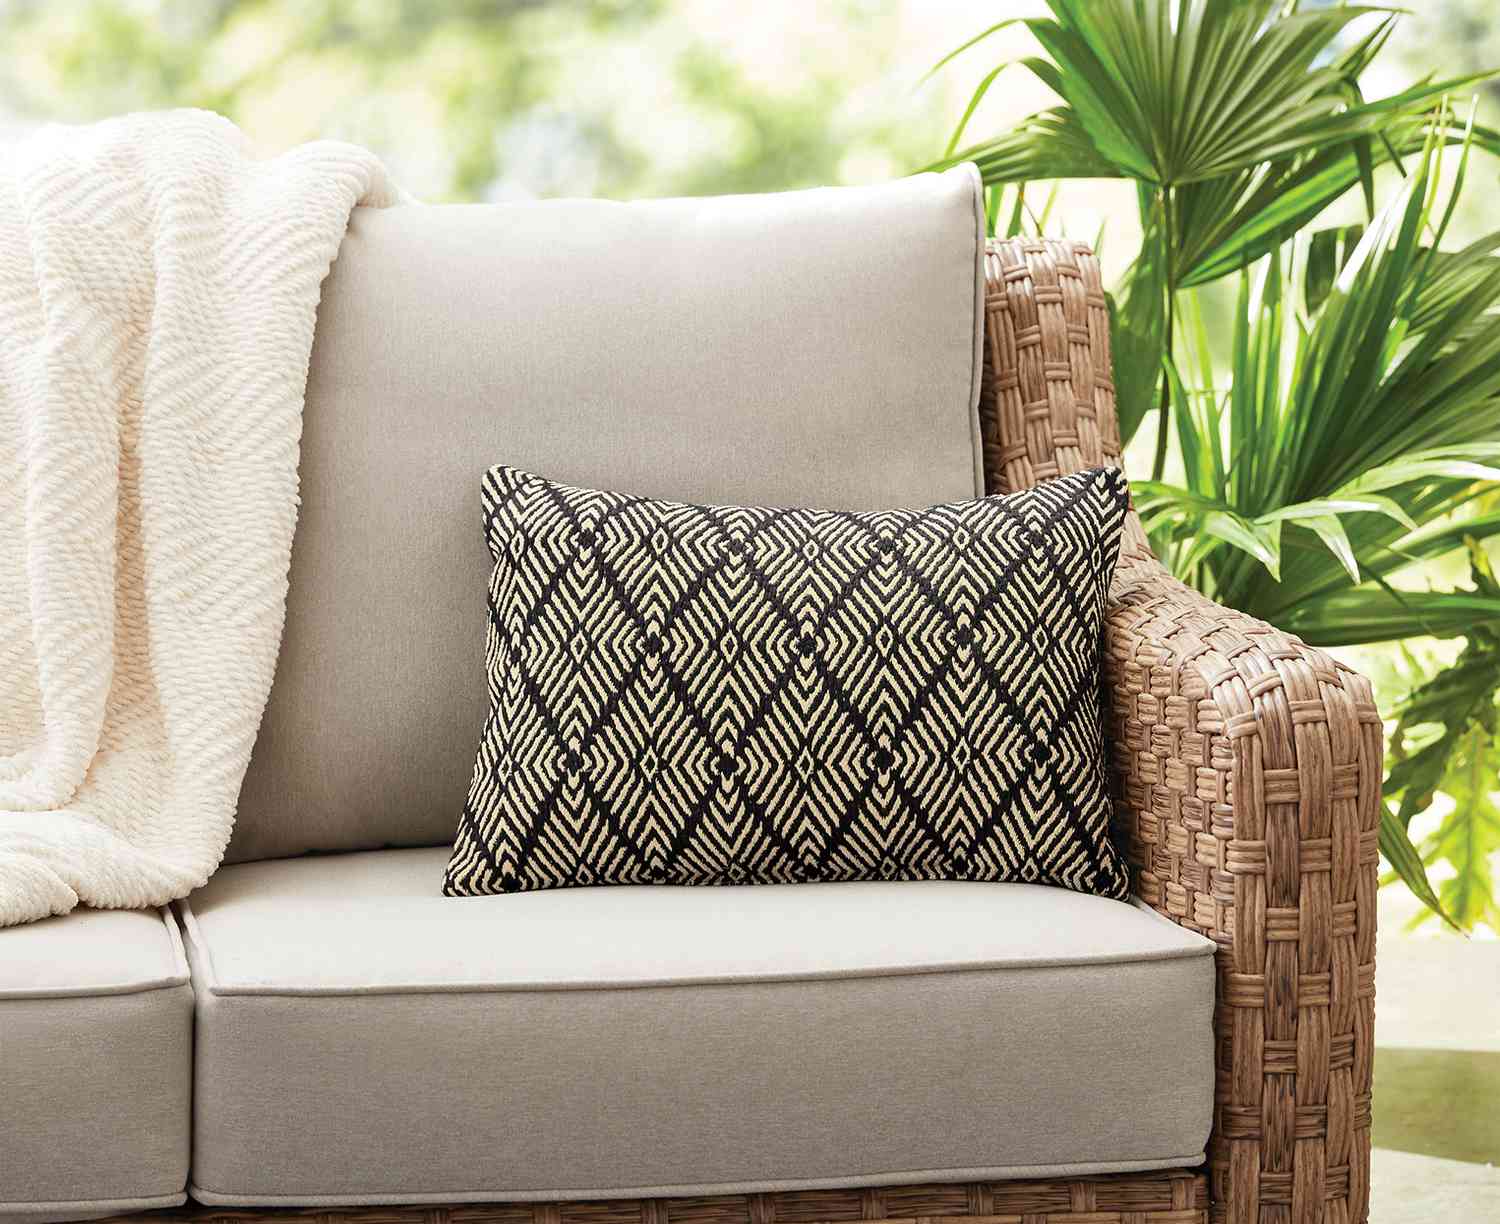 O Outdoor Floral Leaf Printed Cushion Garden Throw Waist Pillow Case Cover Decor 